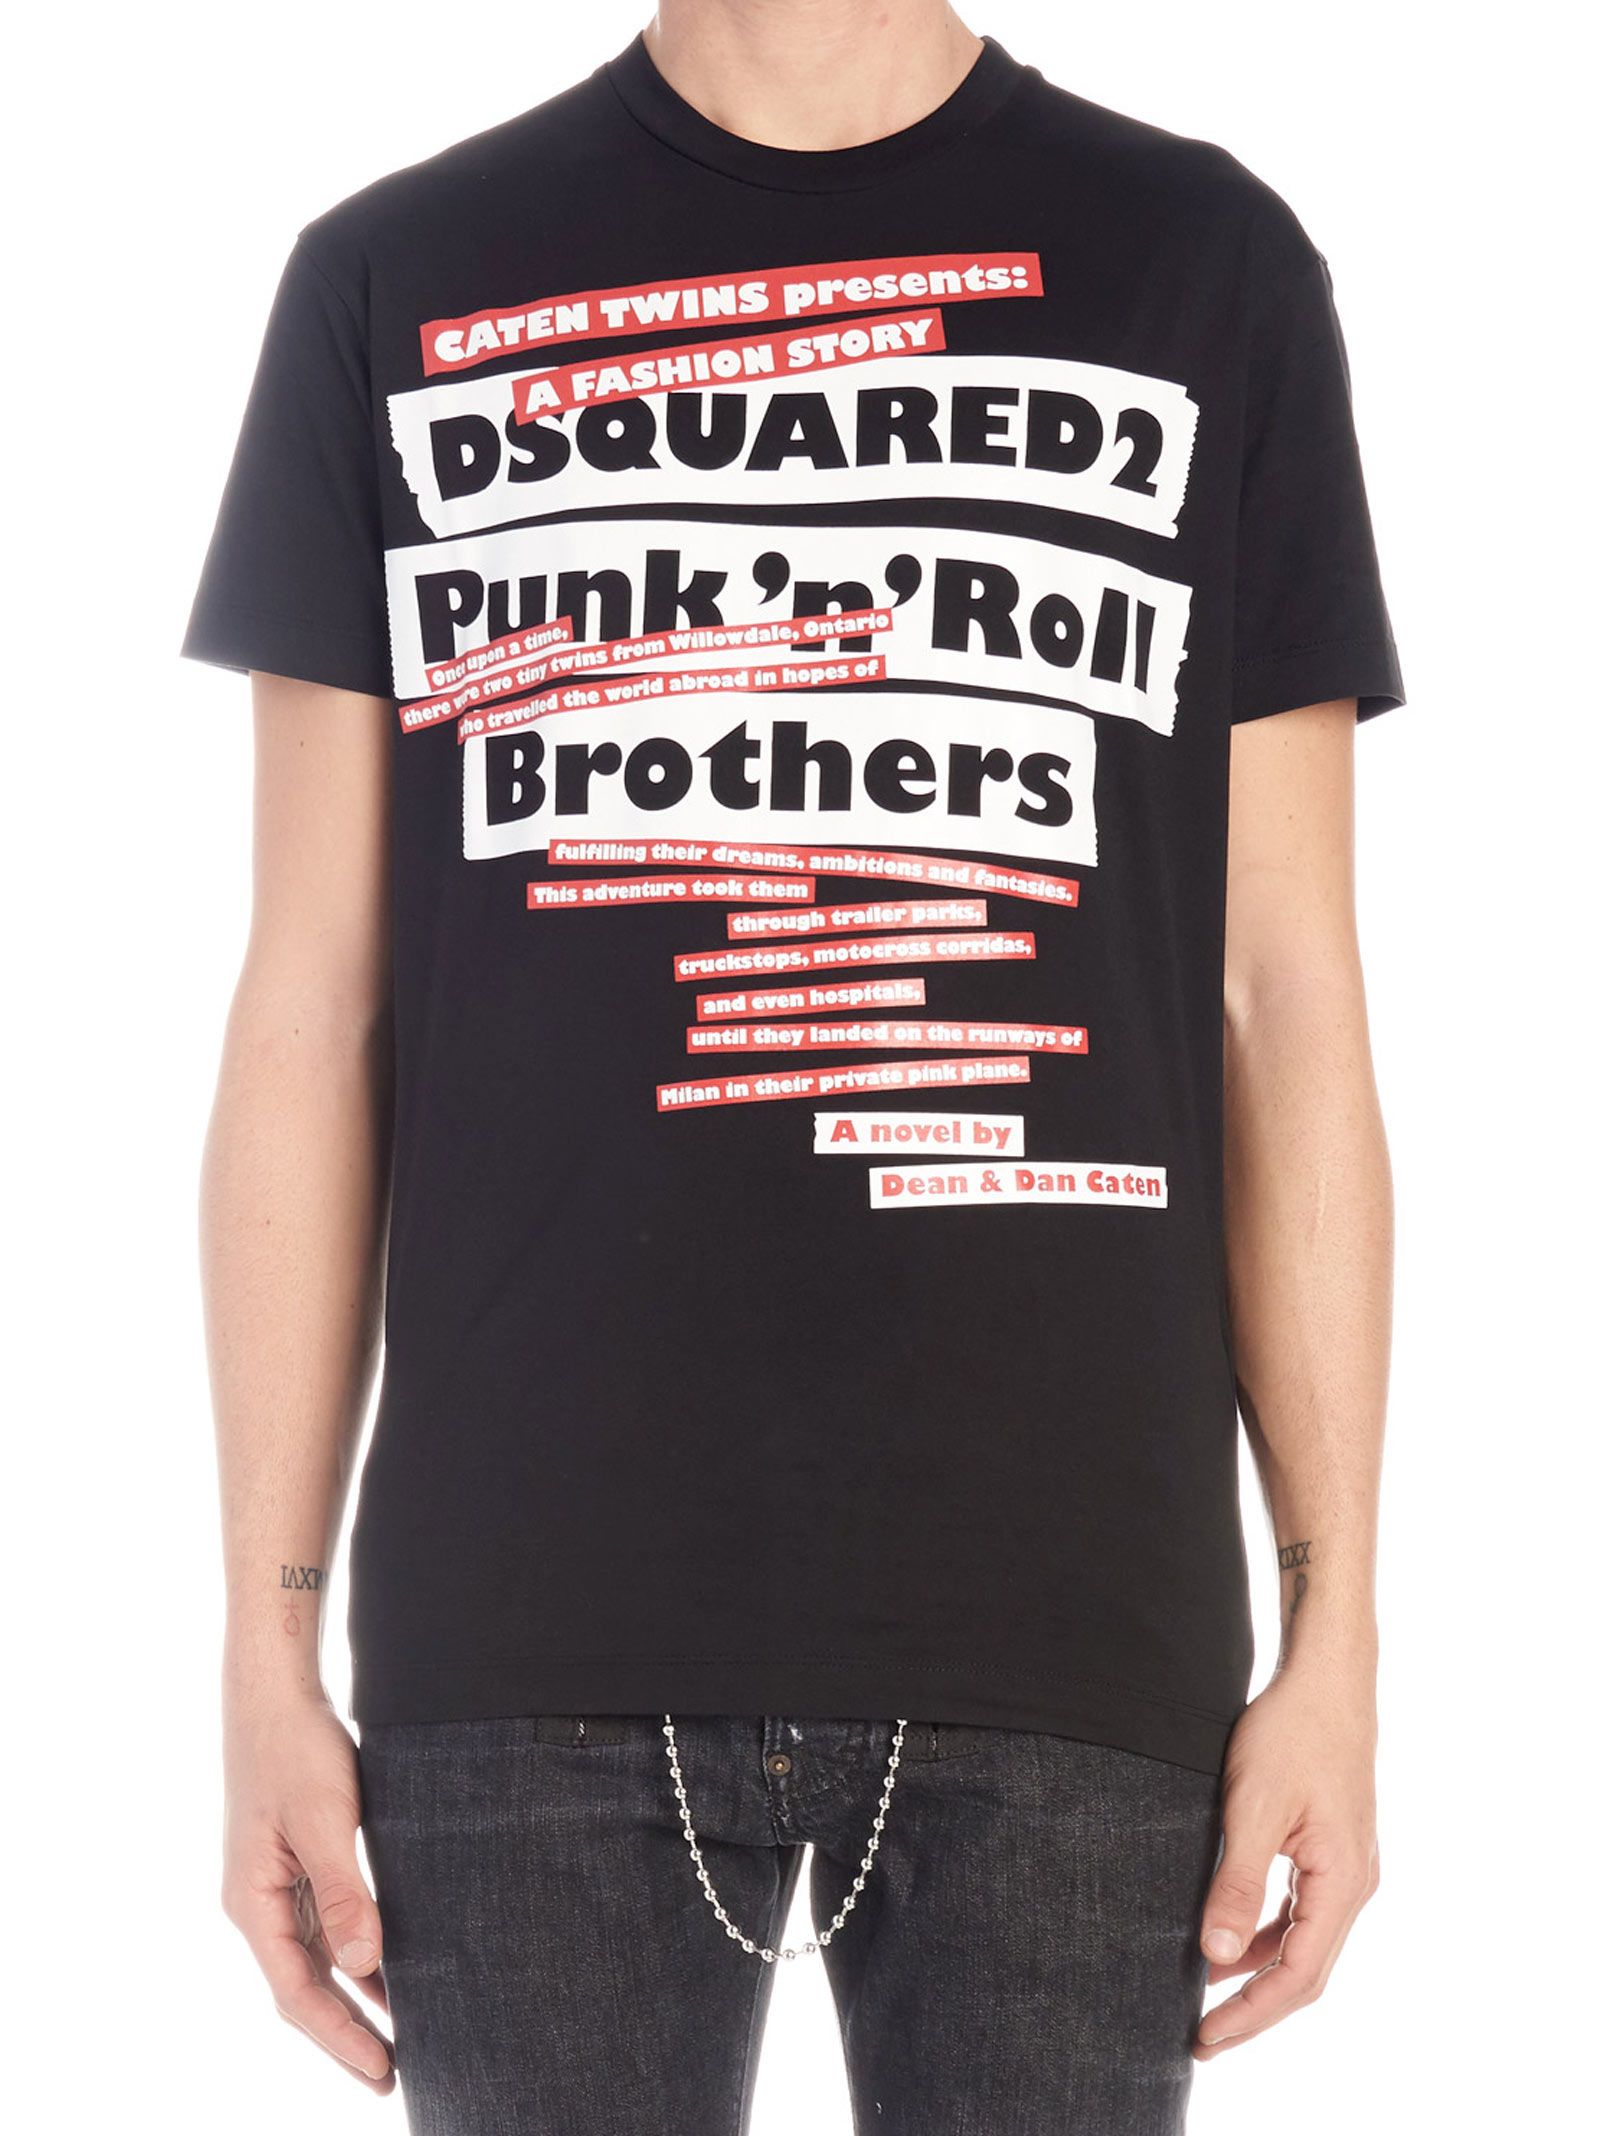 dsquared2 punk n roll t shirt